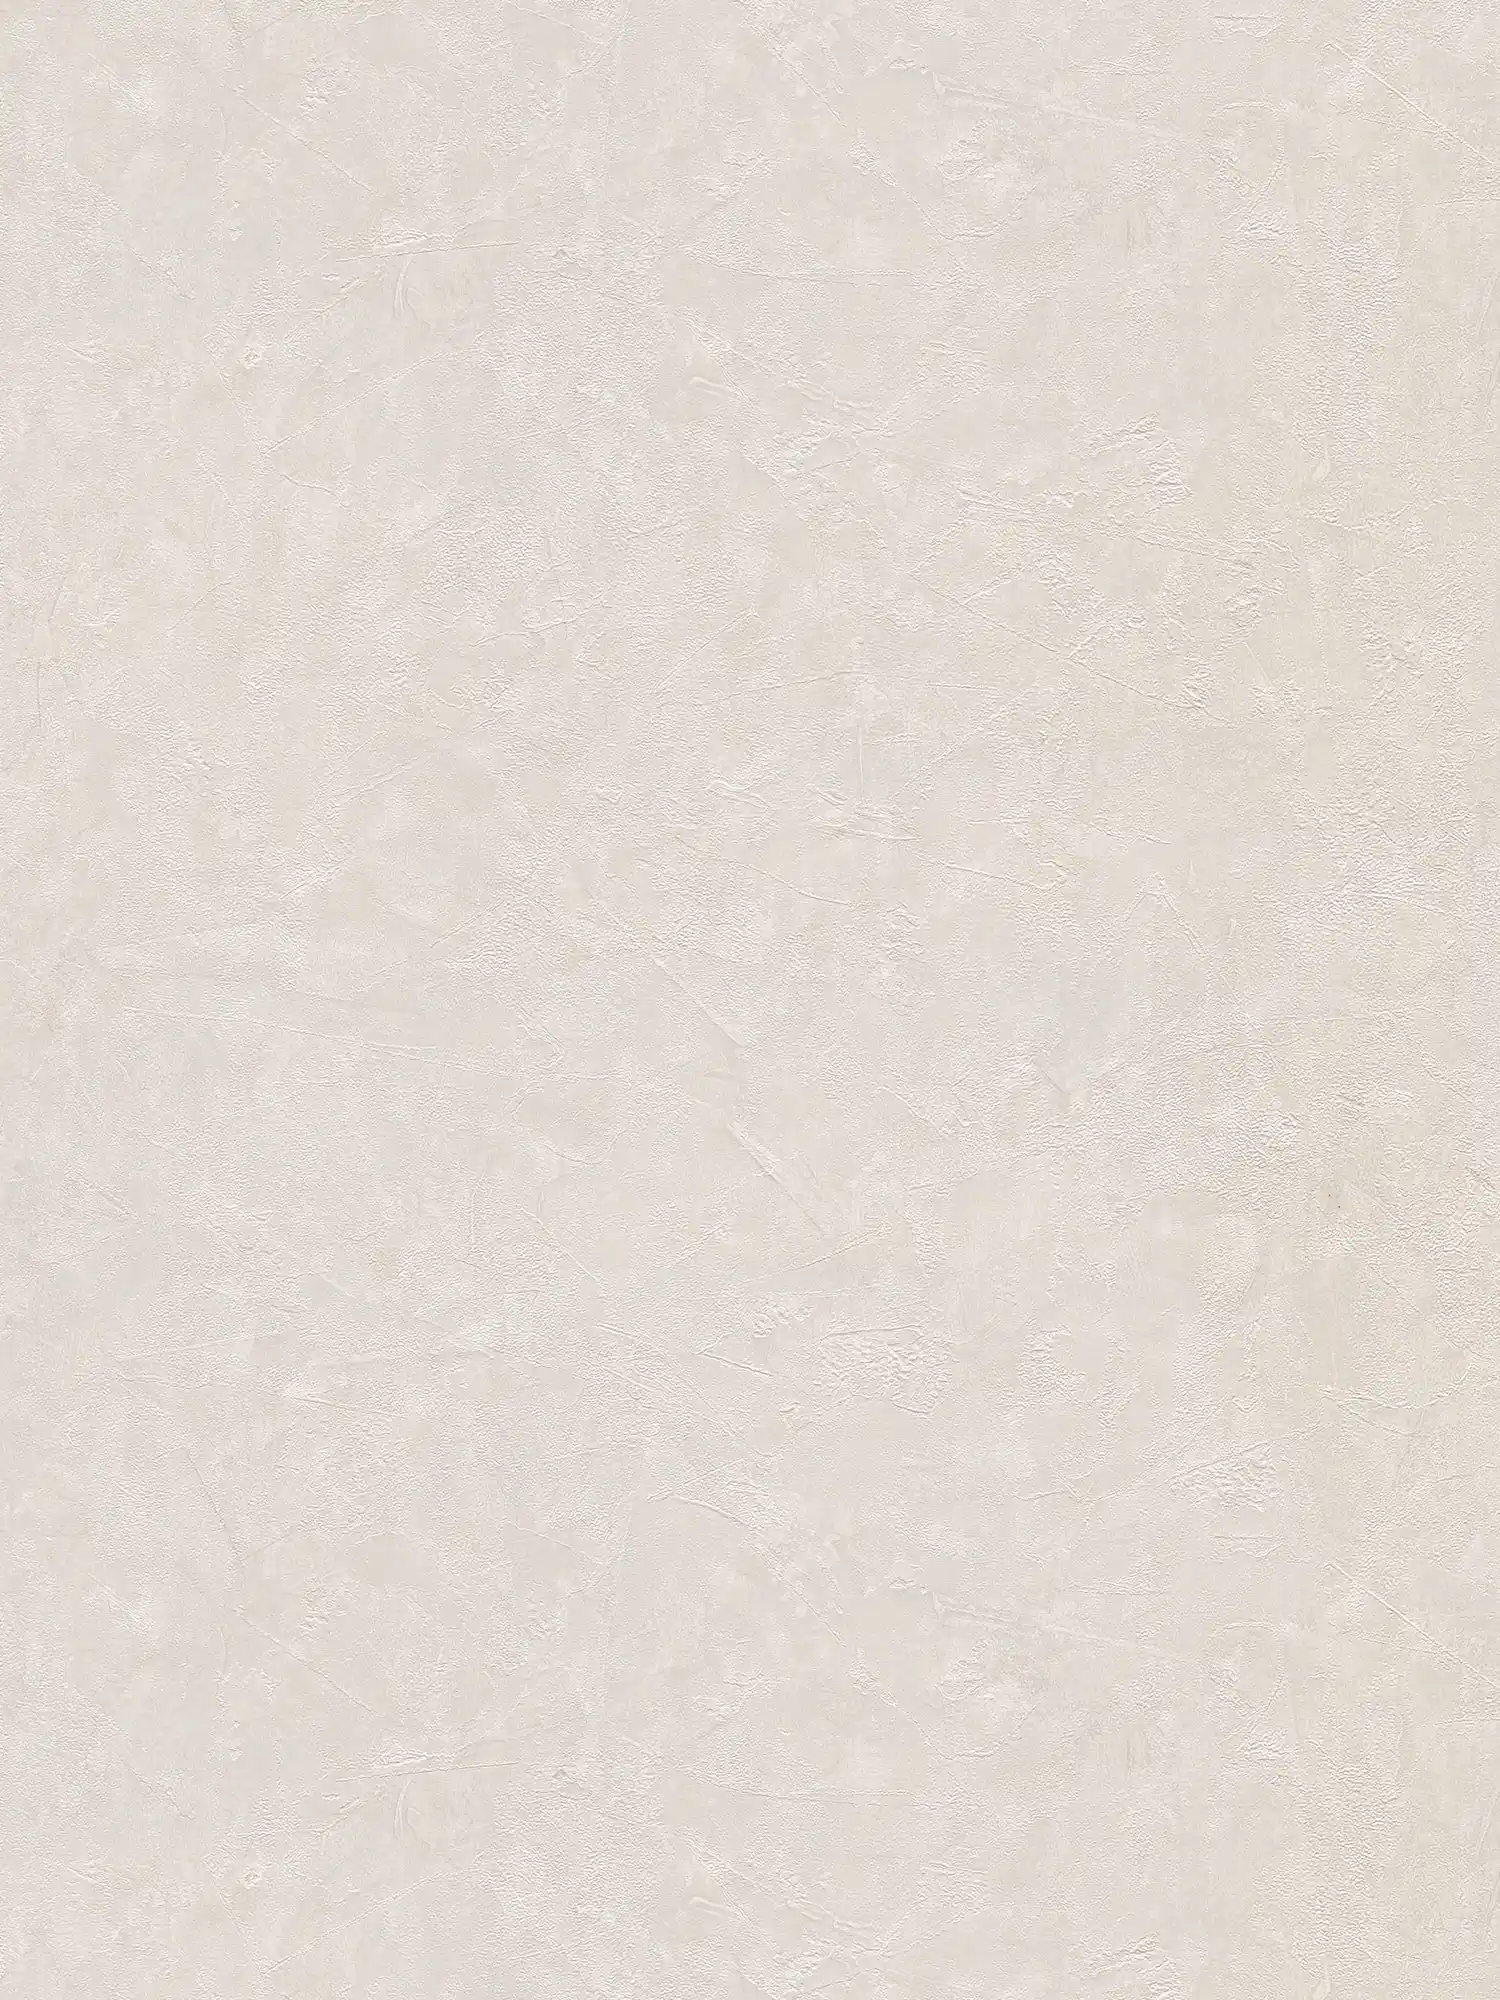 Plaster wallpaper plain & textured pattern - cream, grey
